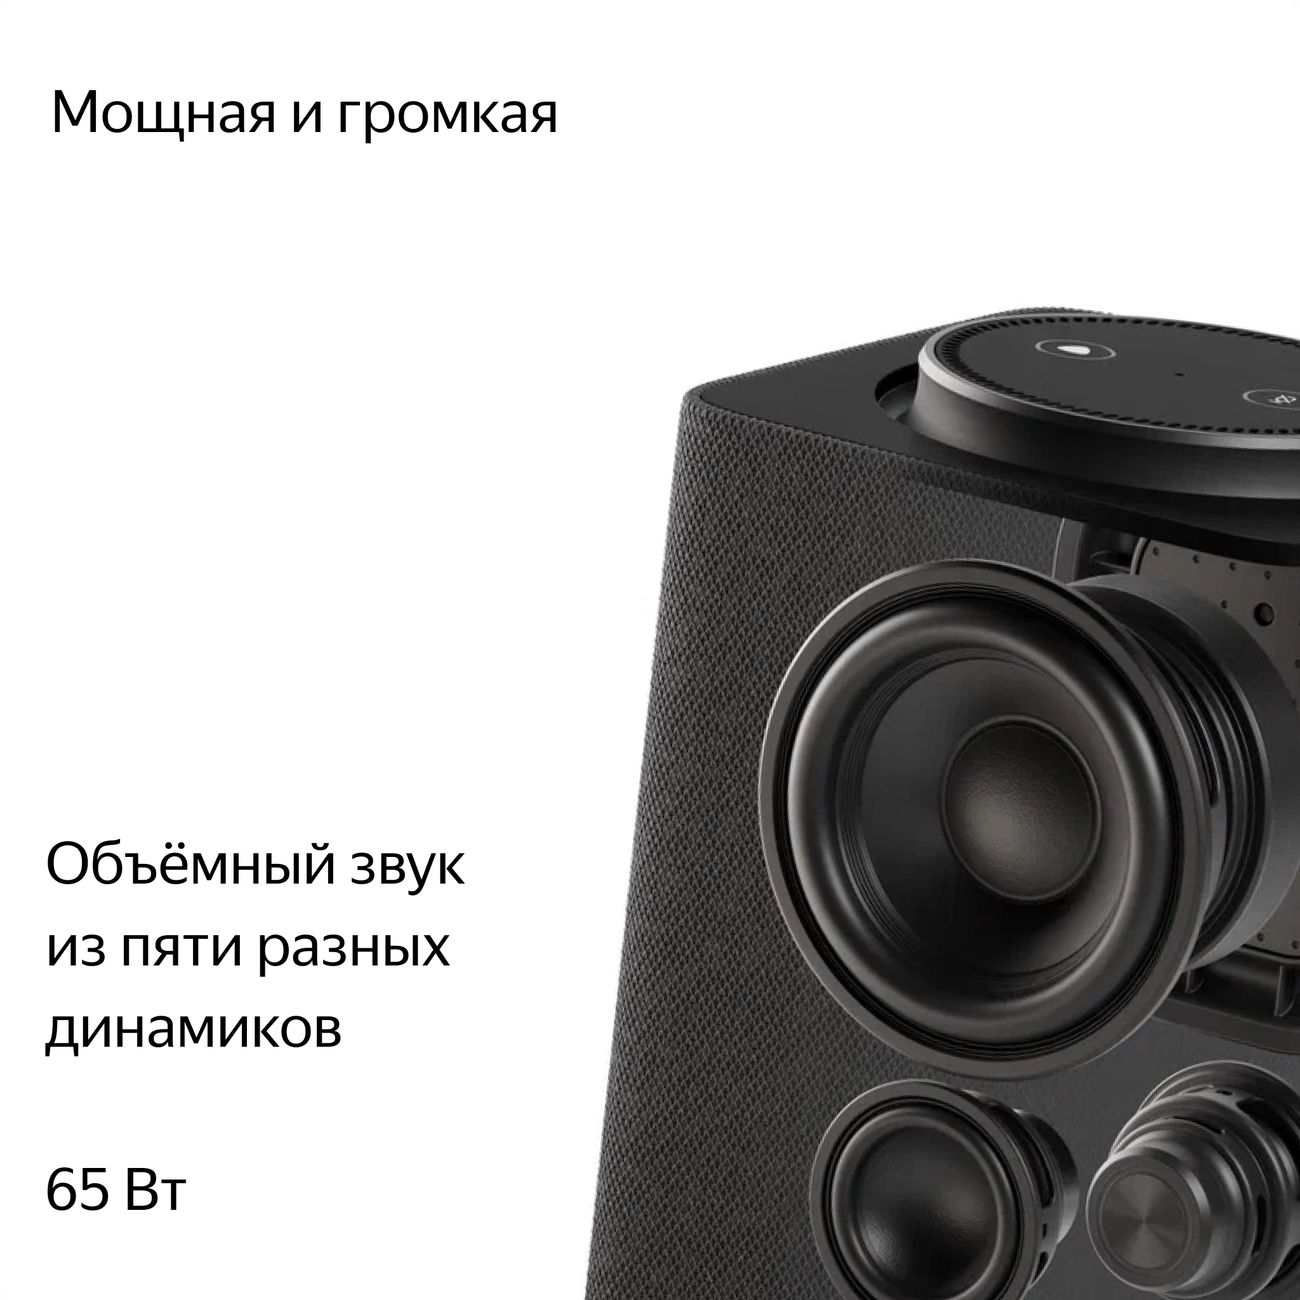 Умная колонка Яндекс.Станция Max with Zigbee model YNDX-00053K (black)